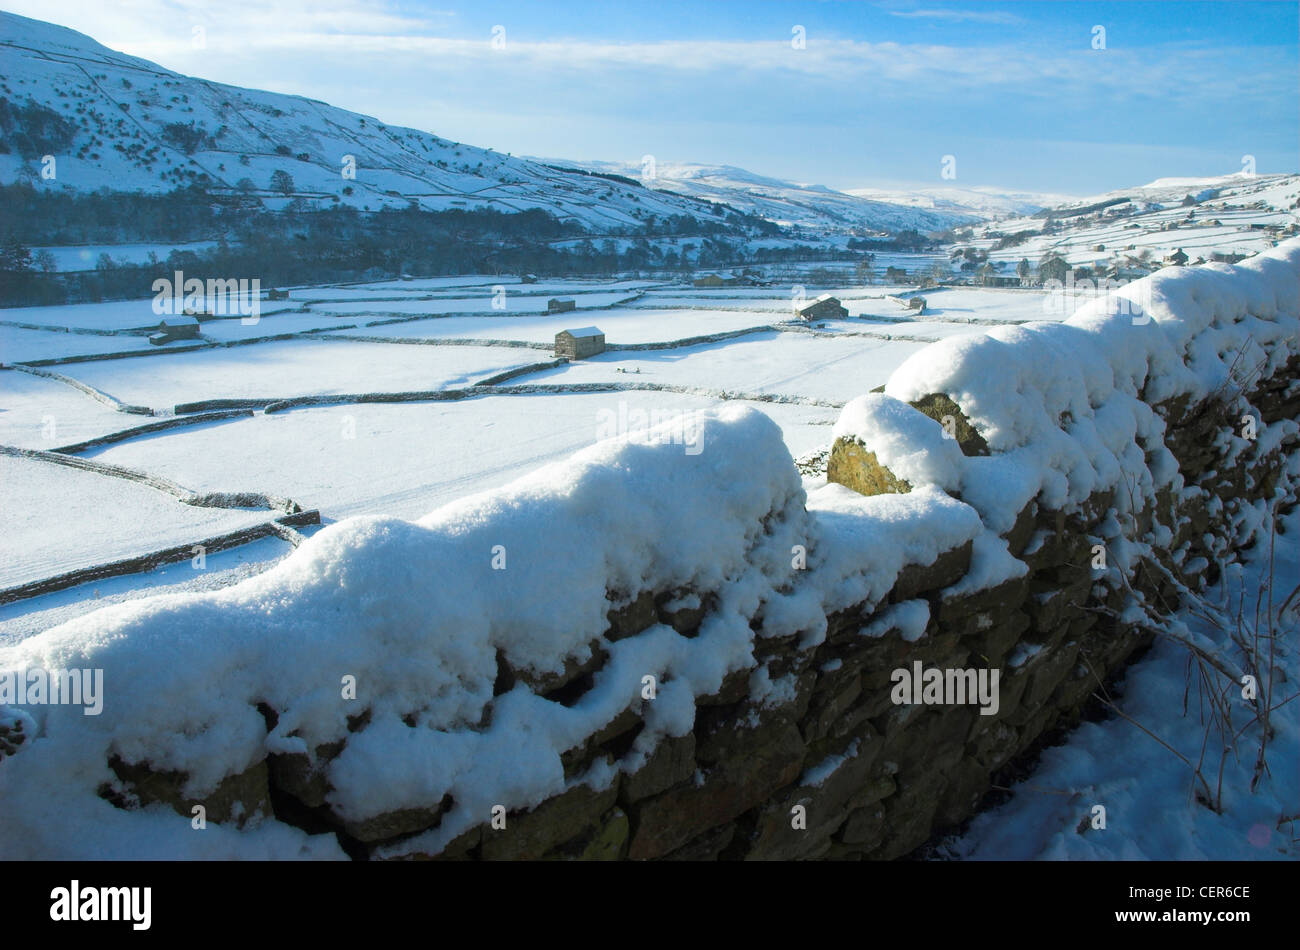 Coperta di neve i campi e muri in pietra a secco in Swaledale vicino Gunnerside. Foto Stock